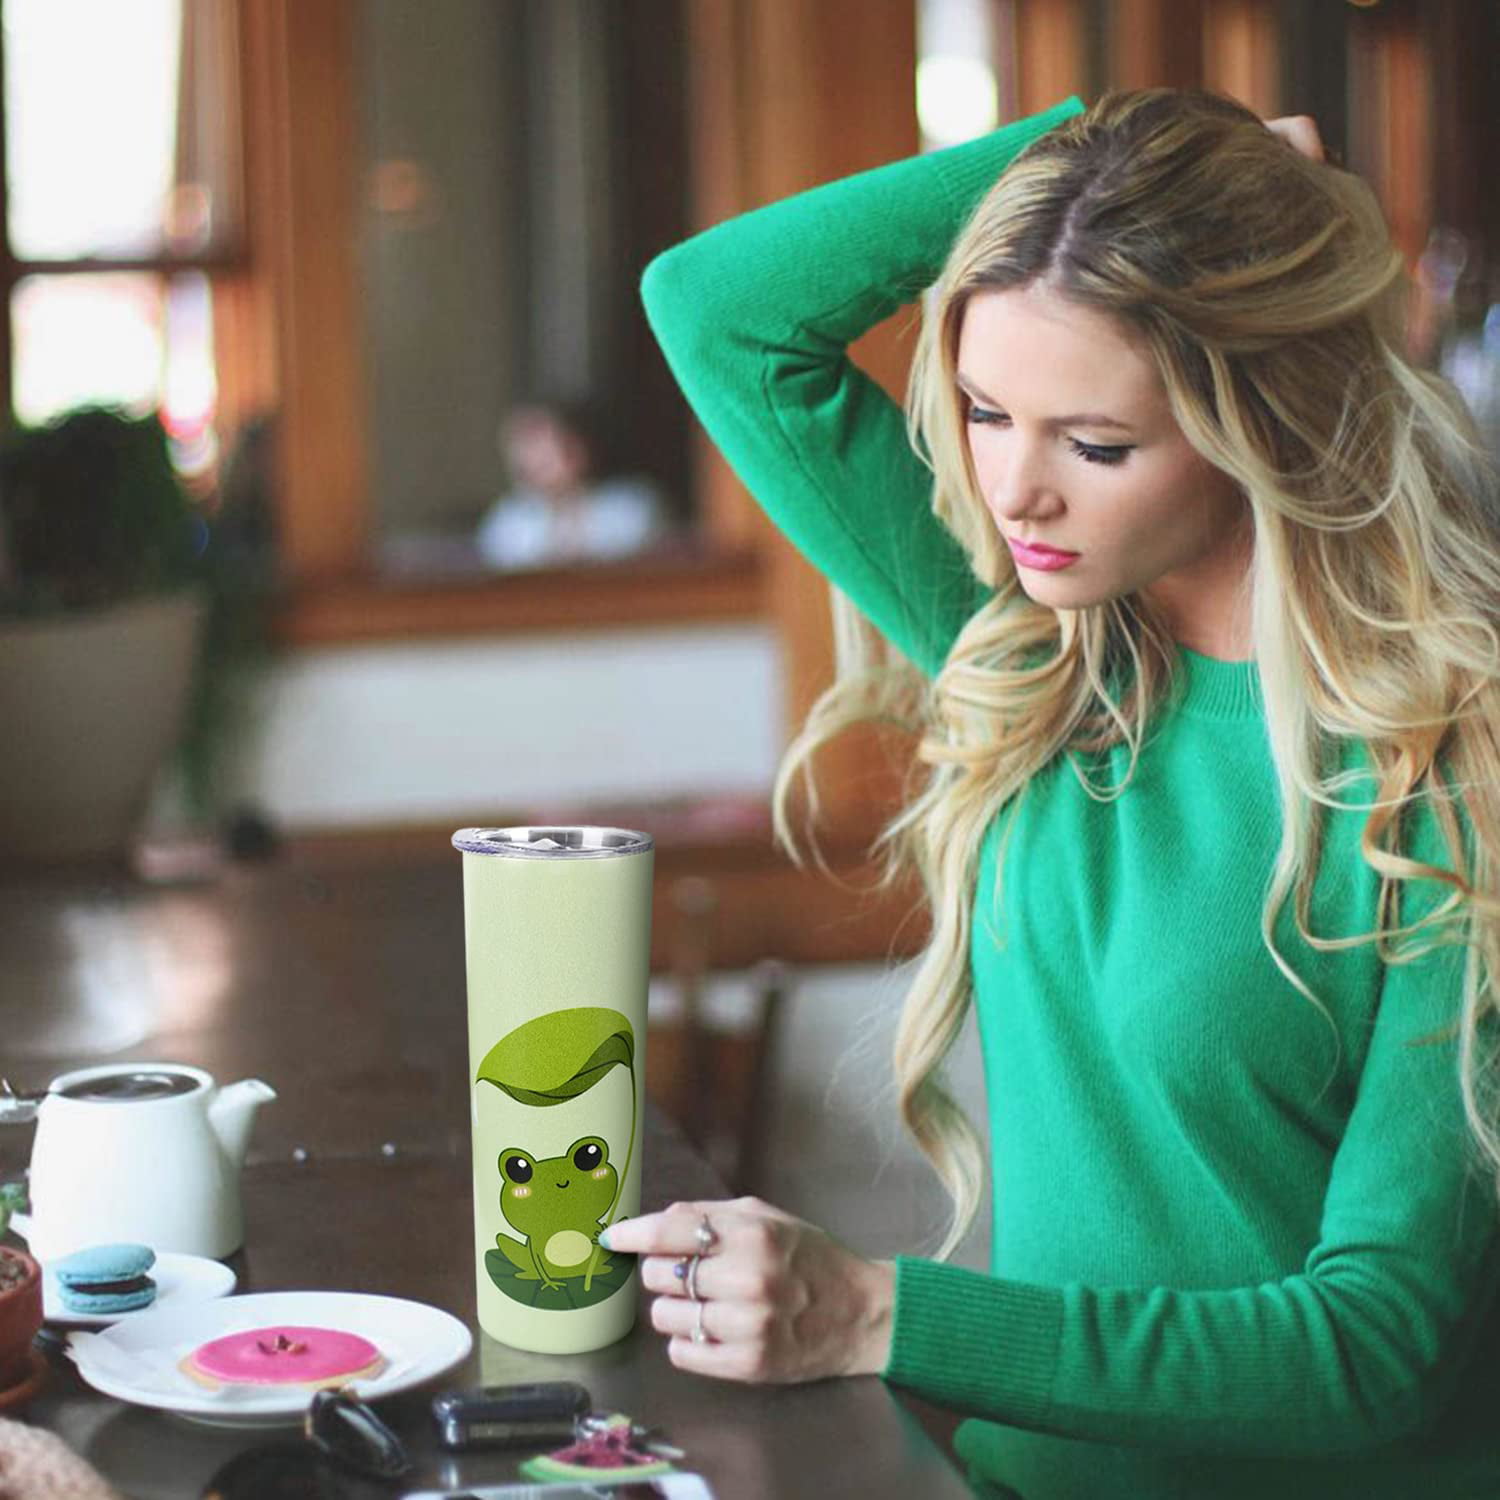 Whimsical Frog on Mushroom Coffee Mug - Frog Lovers Coffee Cup Gift - –  Running Frog Studio